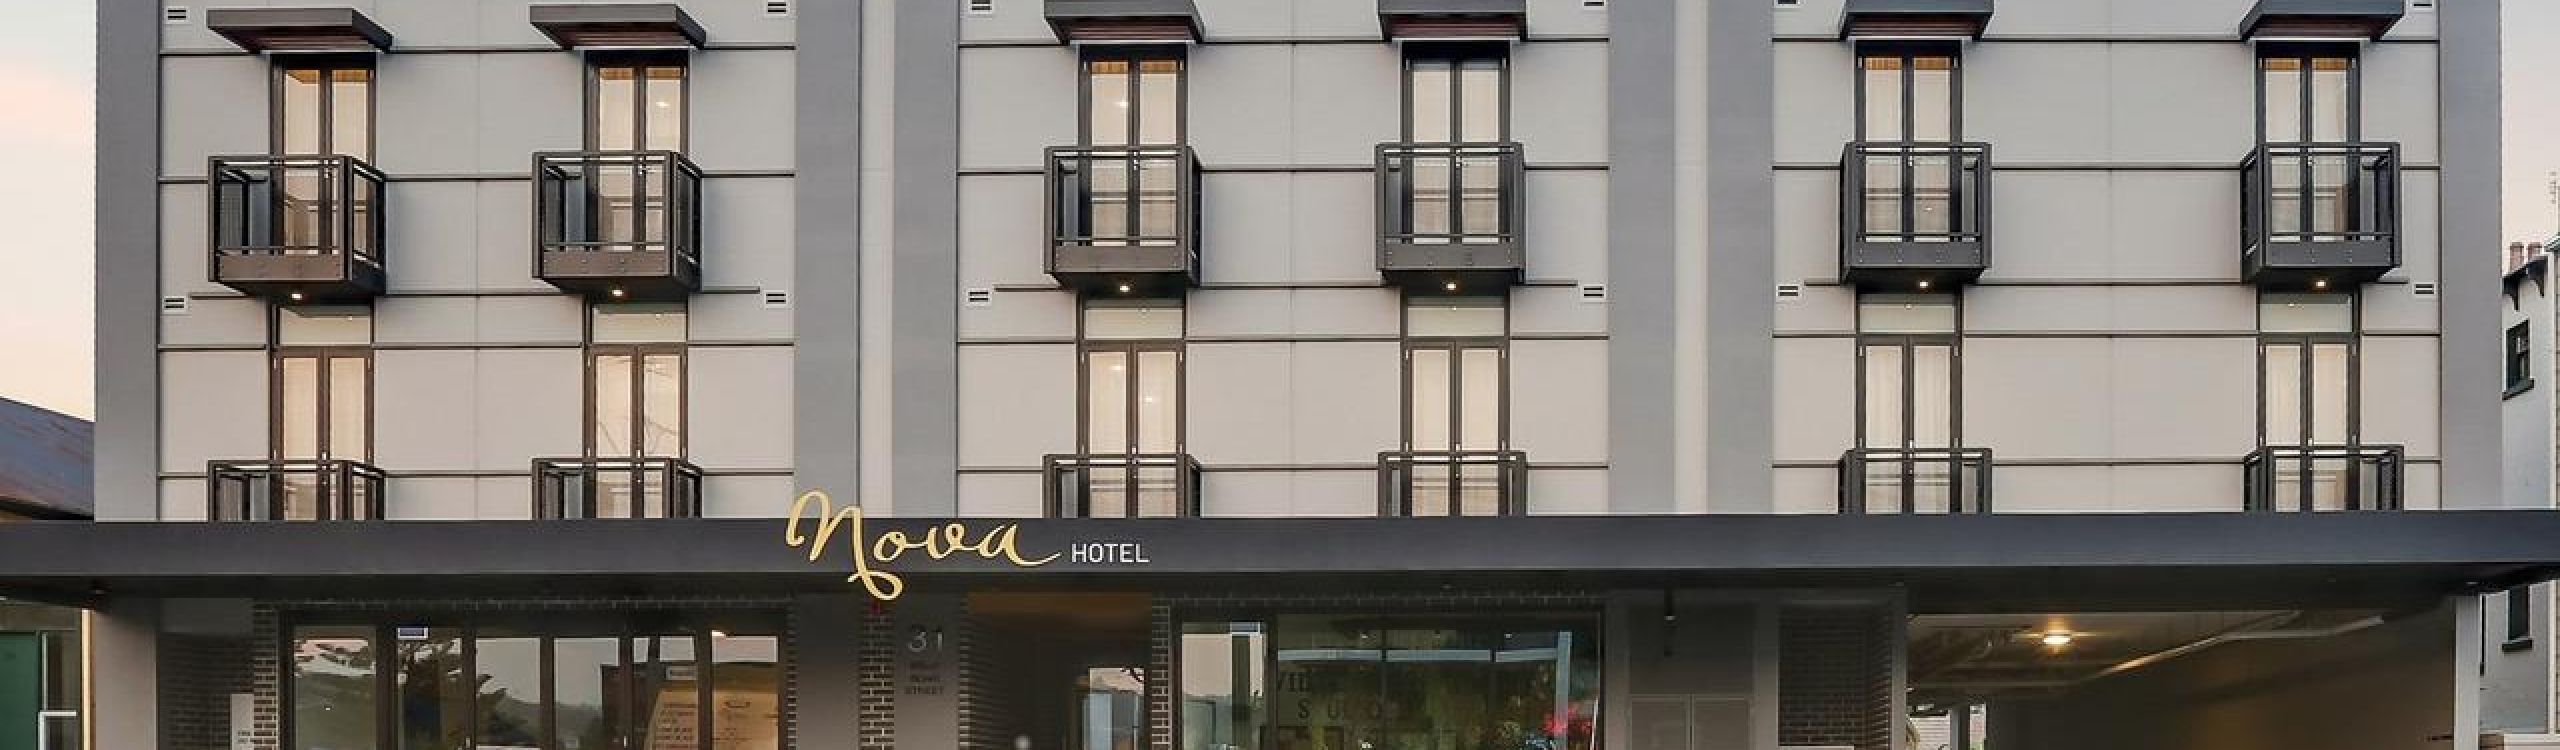 Nova Kiama Hotel Front